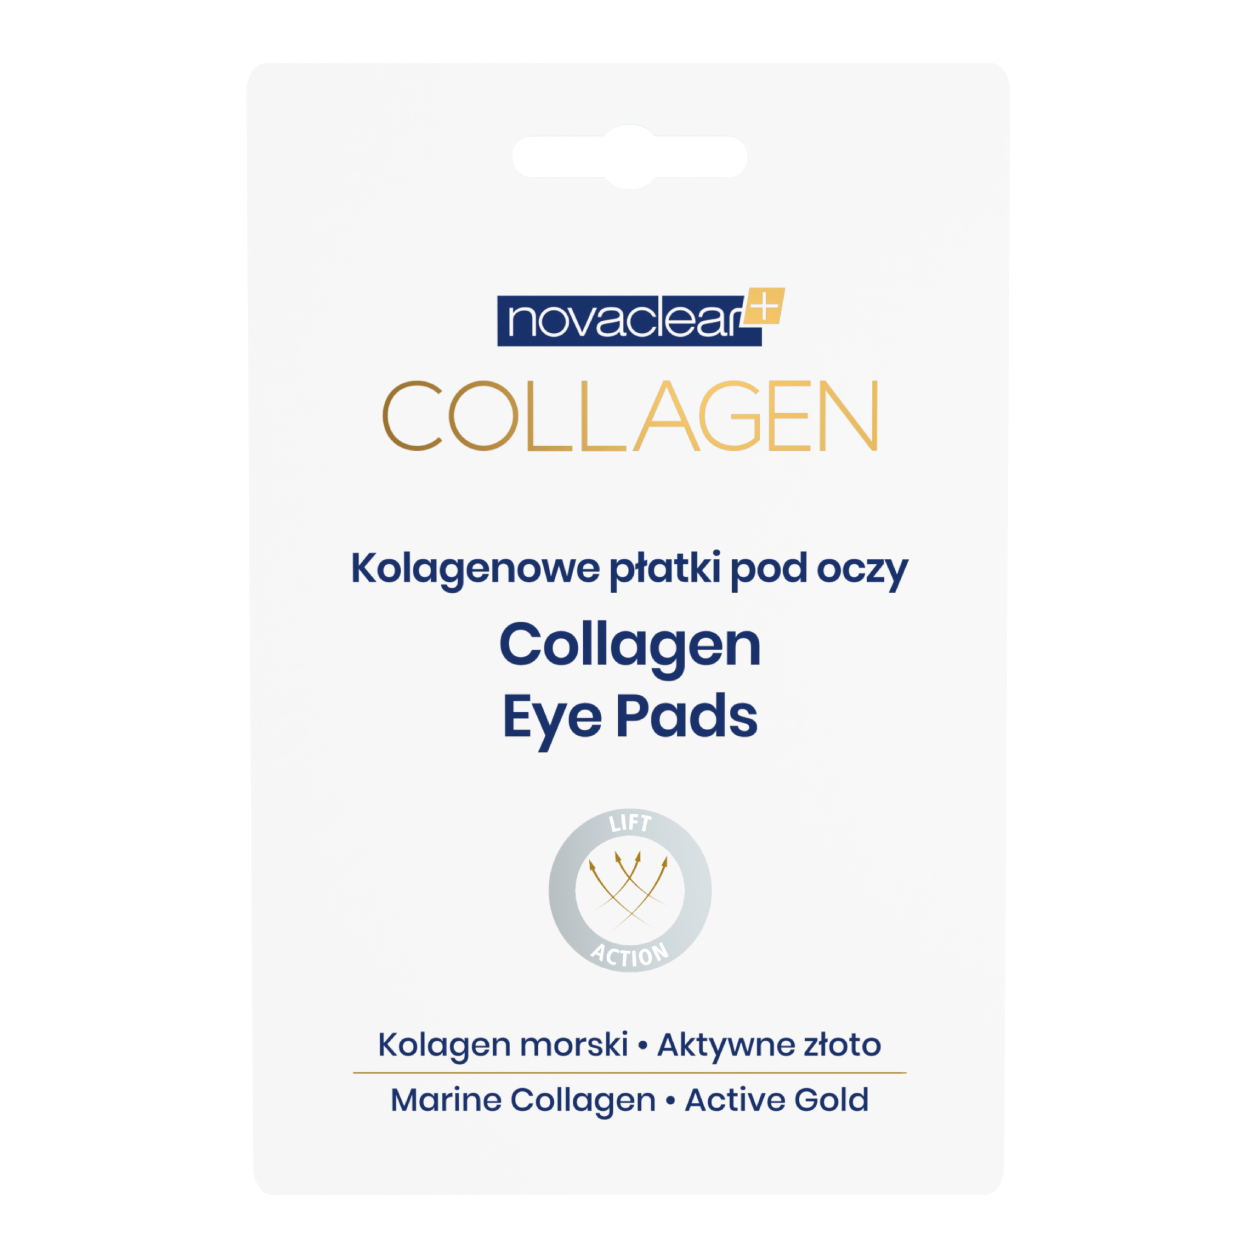 novaclear-collagen-_kolagenowe-platki-pod-oczy